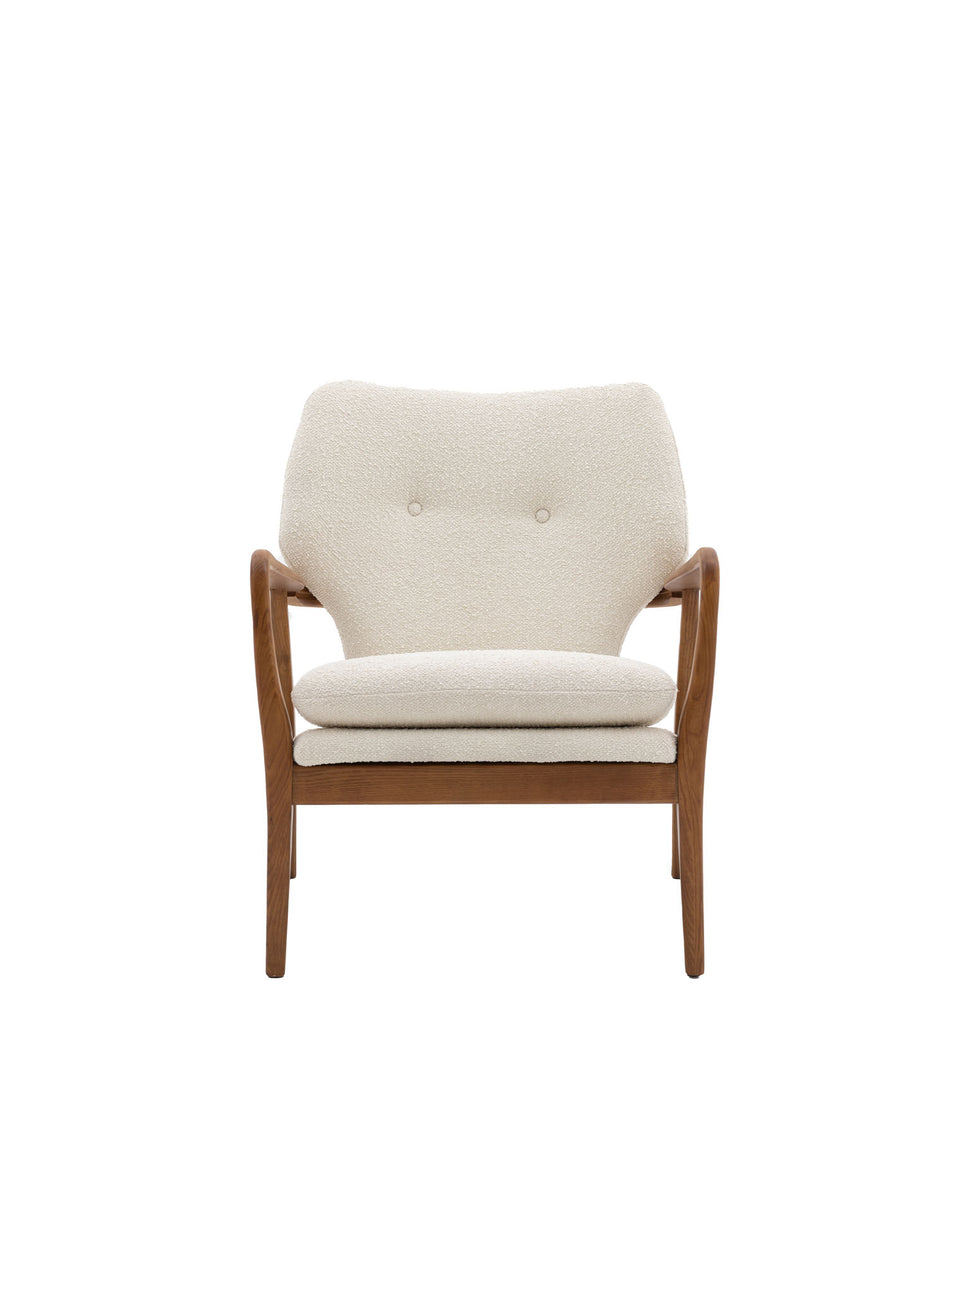 cream mid century chair